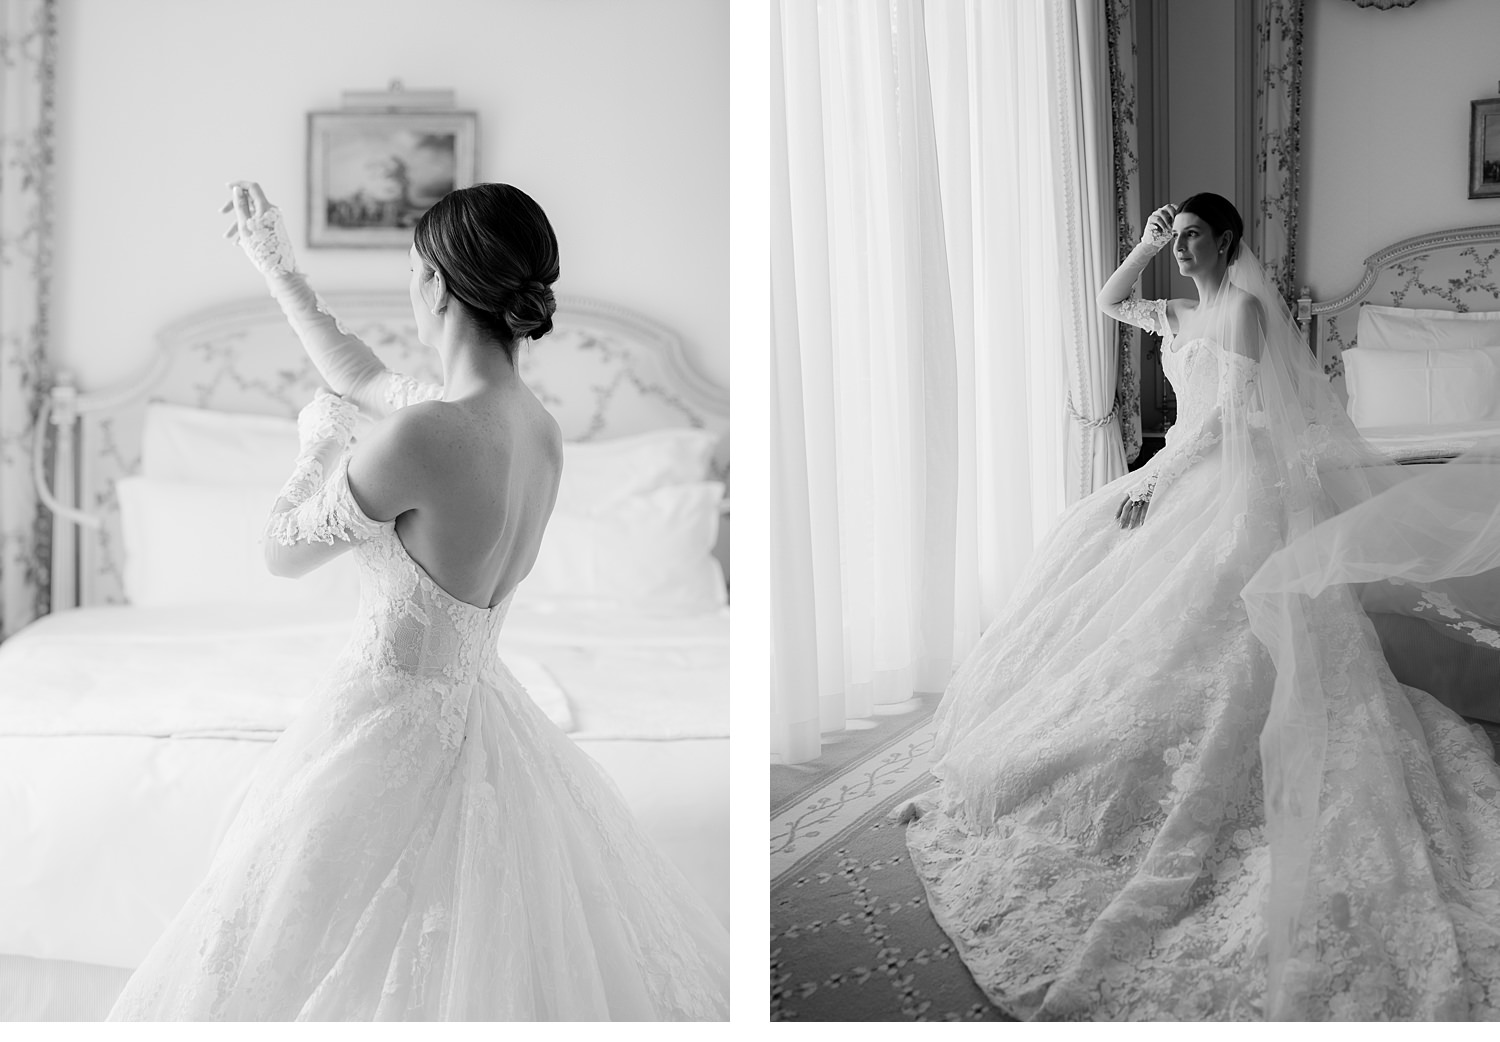 Bride getting ready at the Ritz, Ritz Paris elopement, getting ready portraits, elope to paris